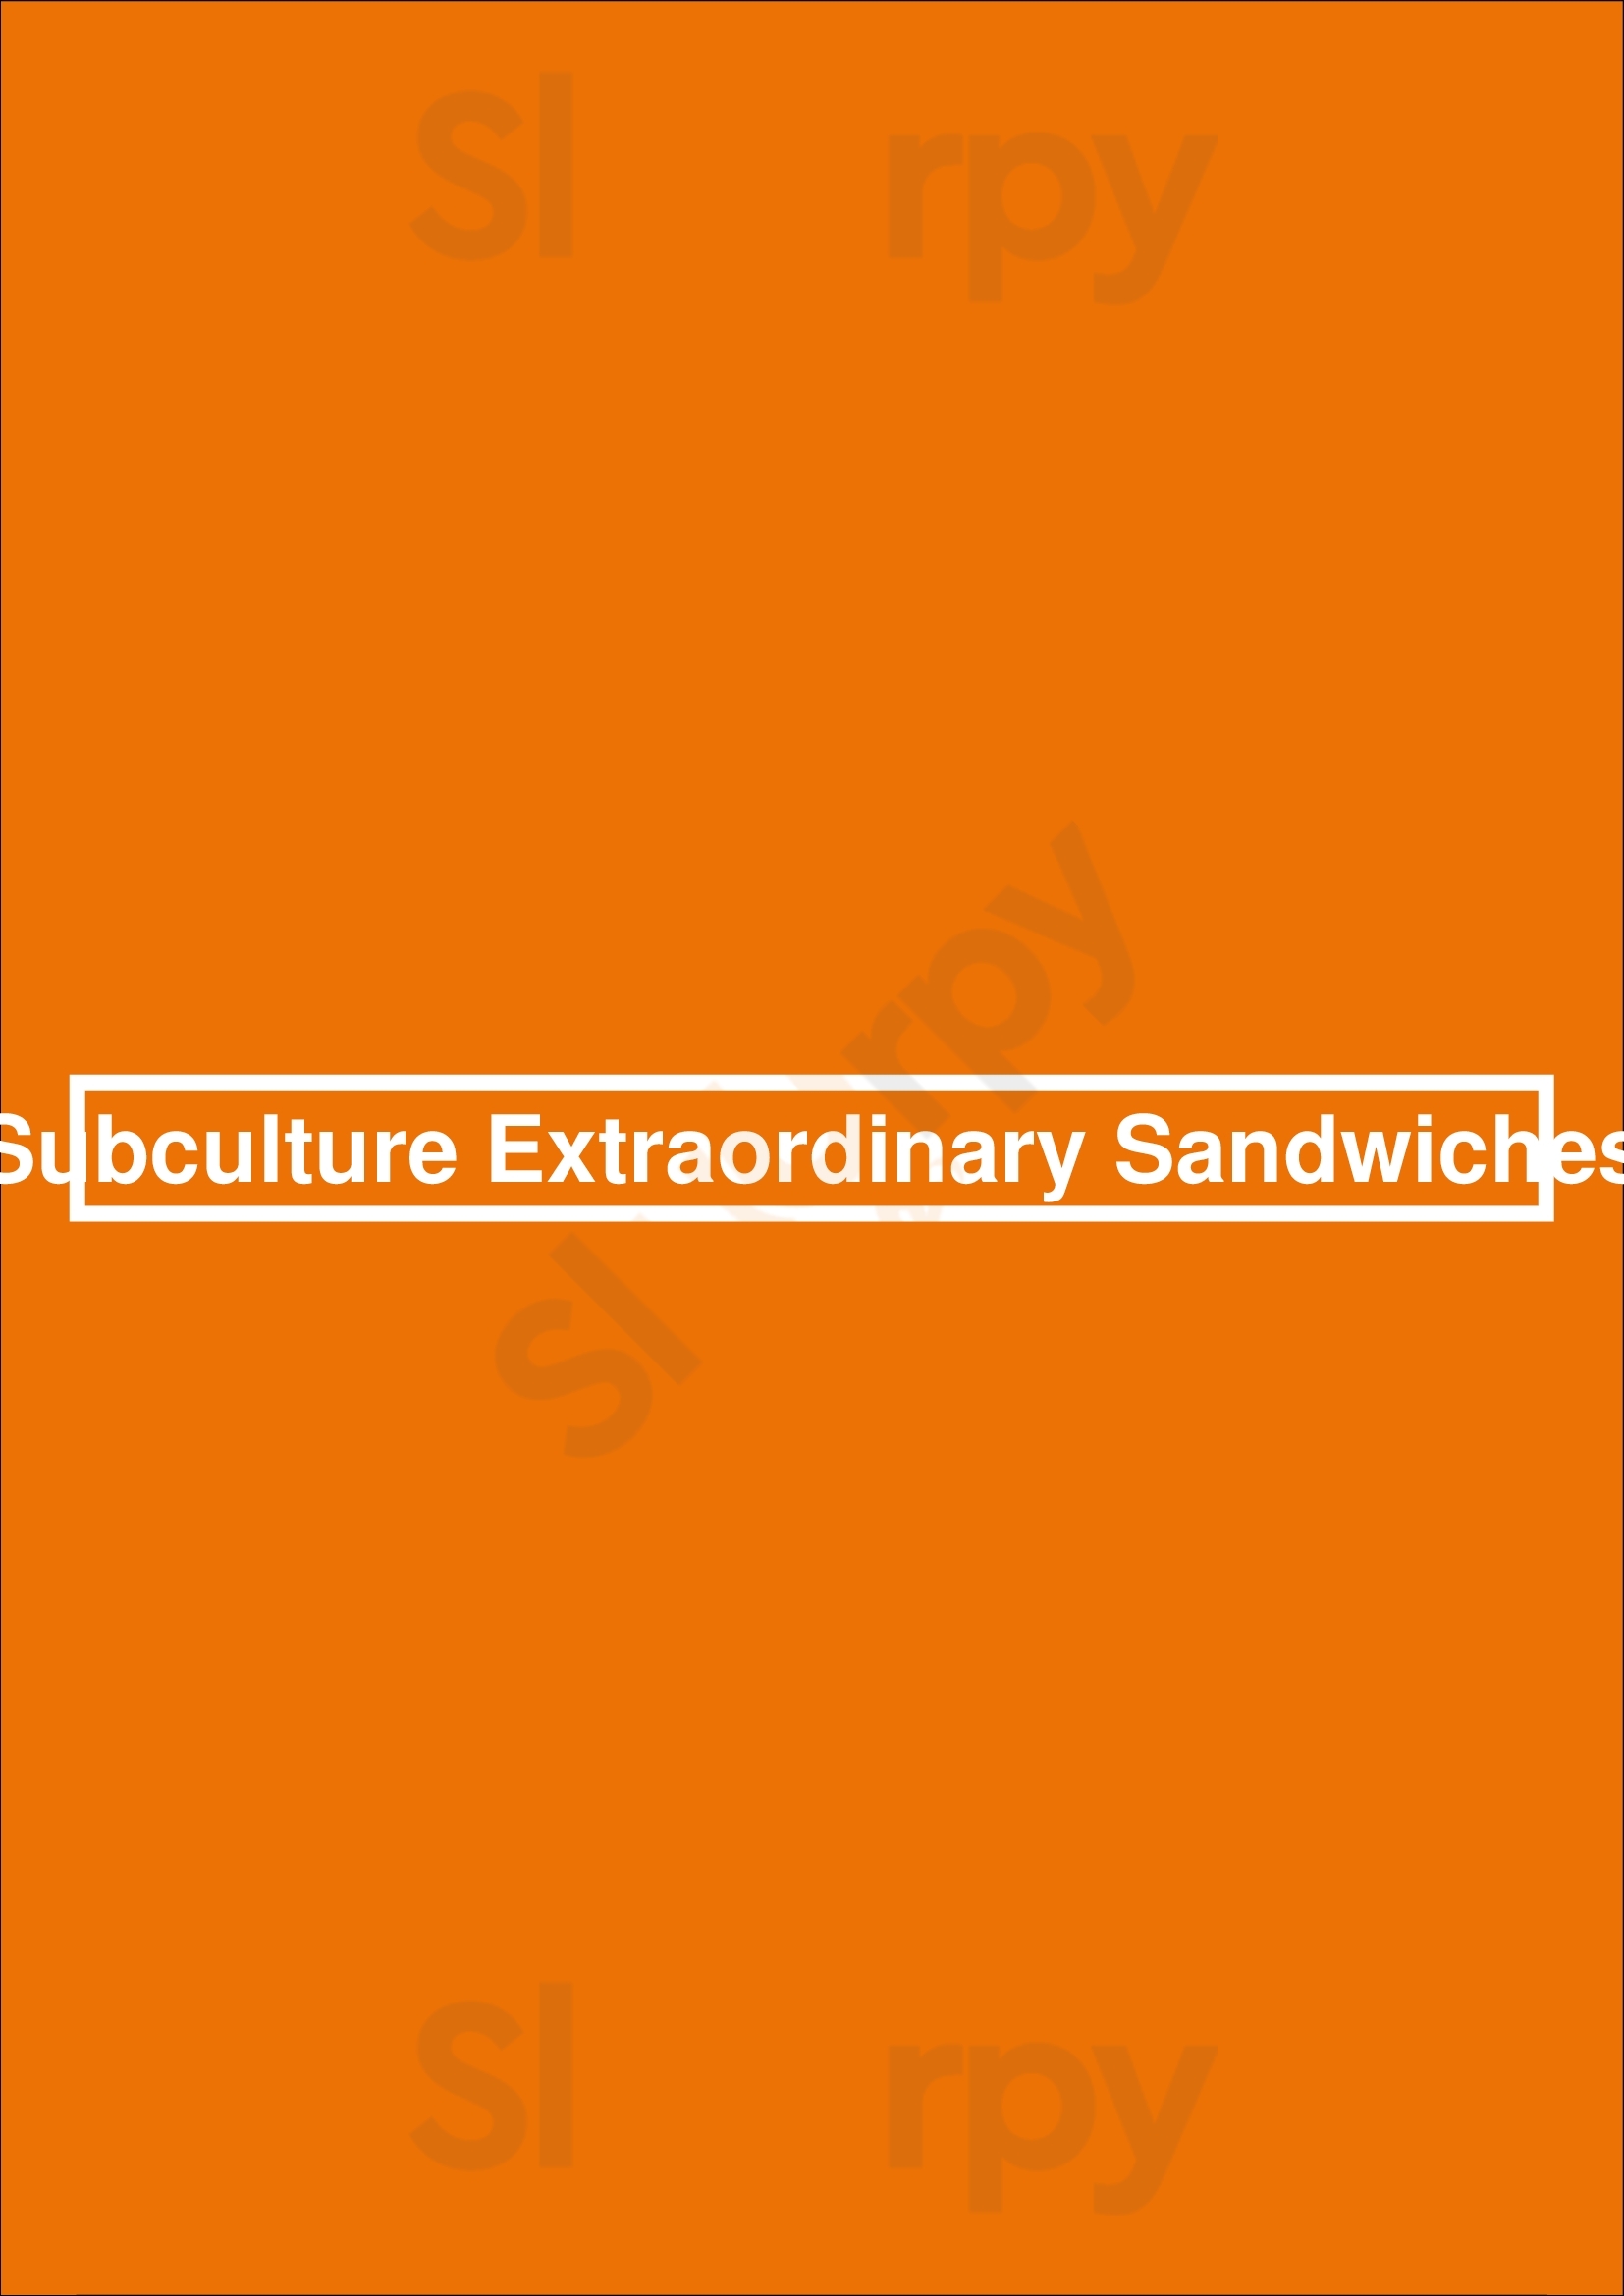 Subculture Extraordinary Sandwiches Huntington Beach Menu - 1